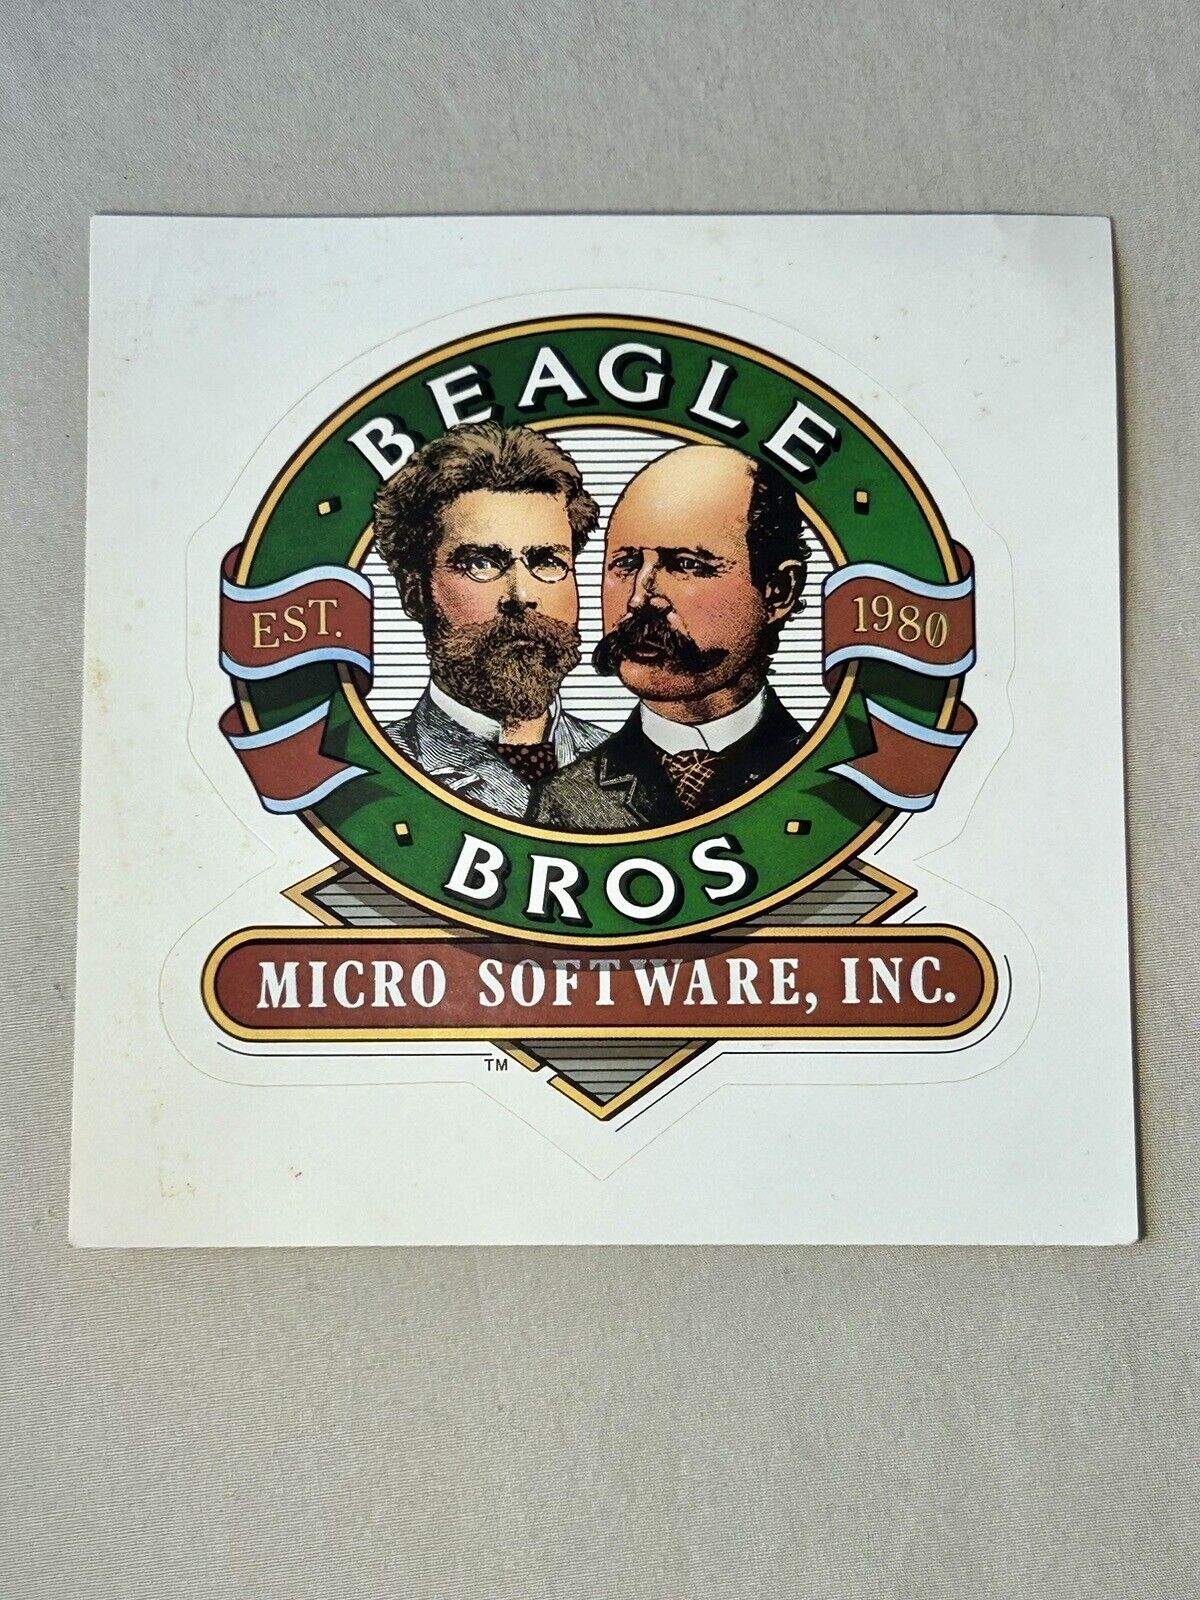 VTG 1980’s Beagle Bros Micro Software, Inc. Sticker~4.25”x4.25”